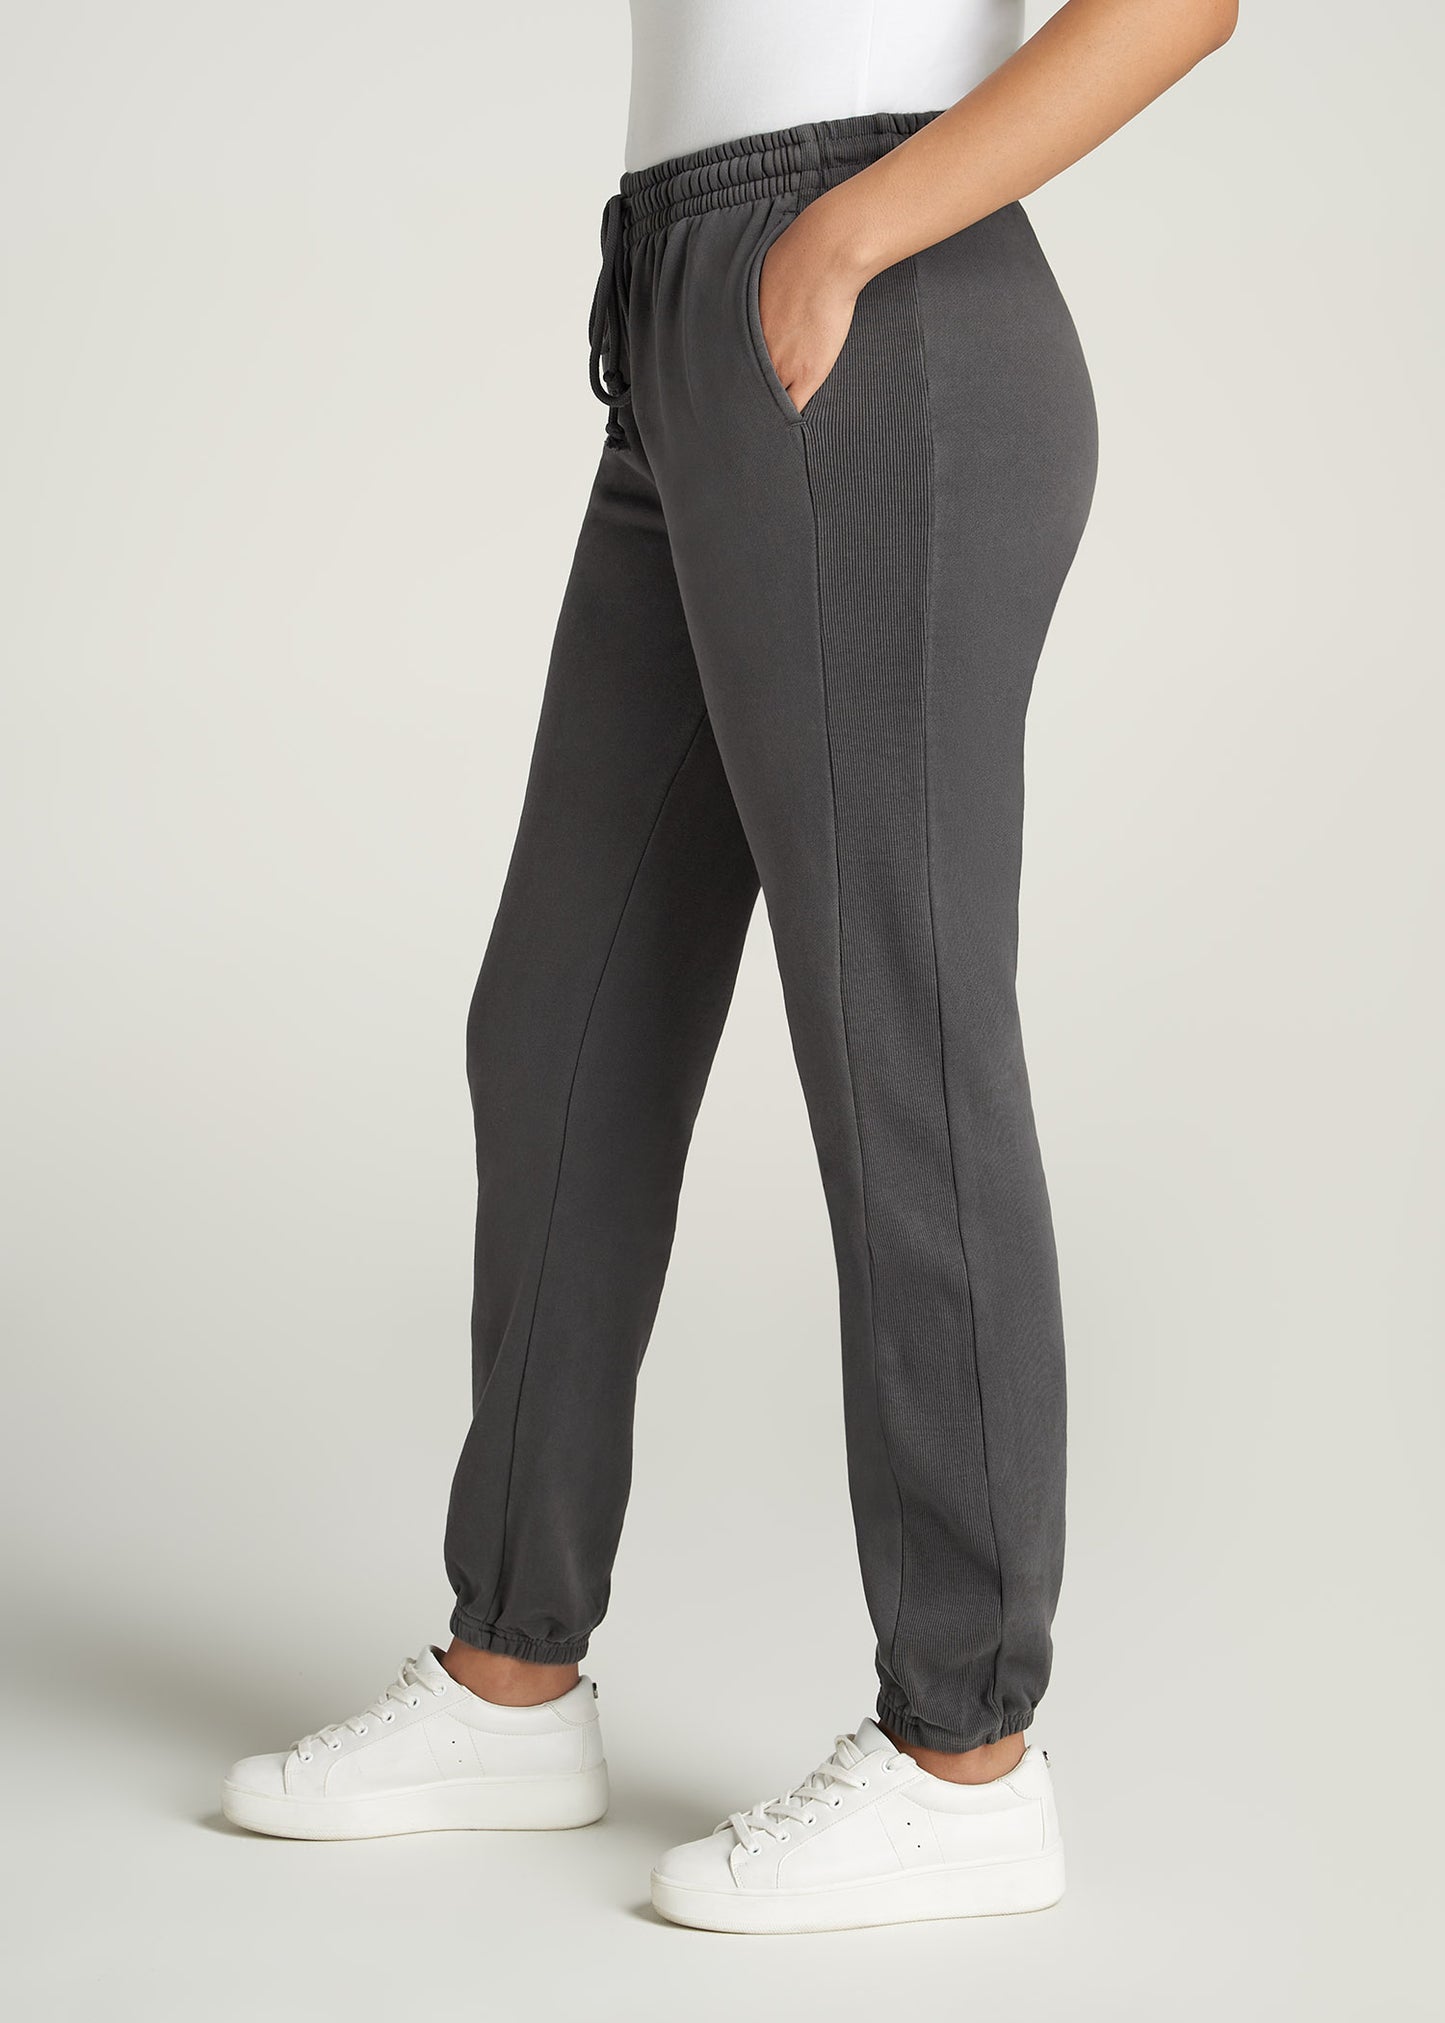 Women's Grey Sweatpants